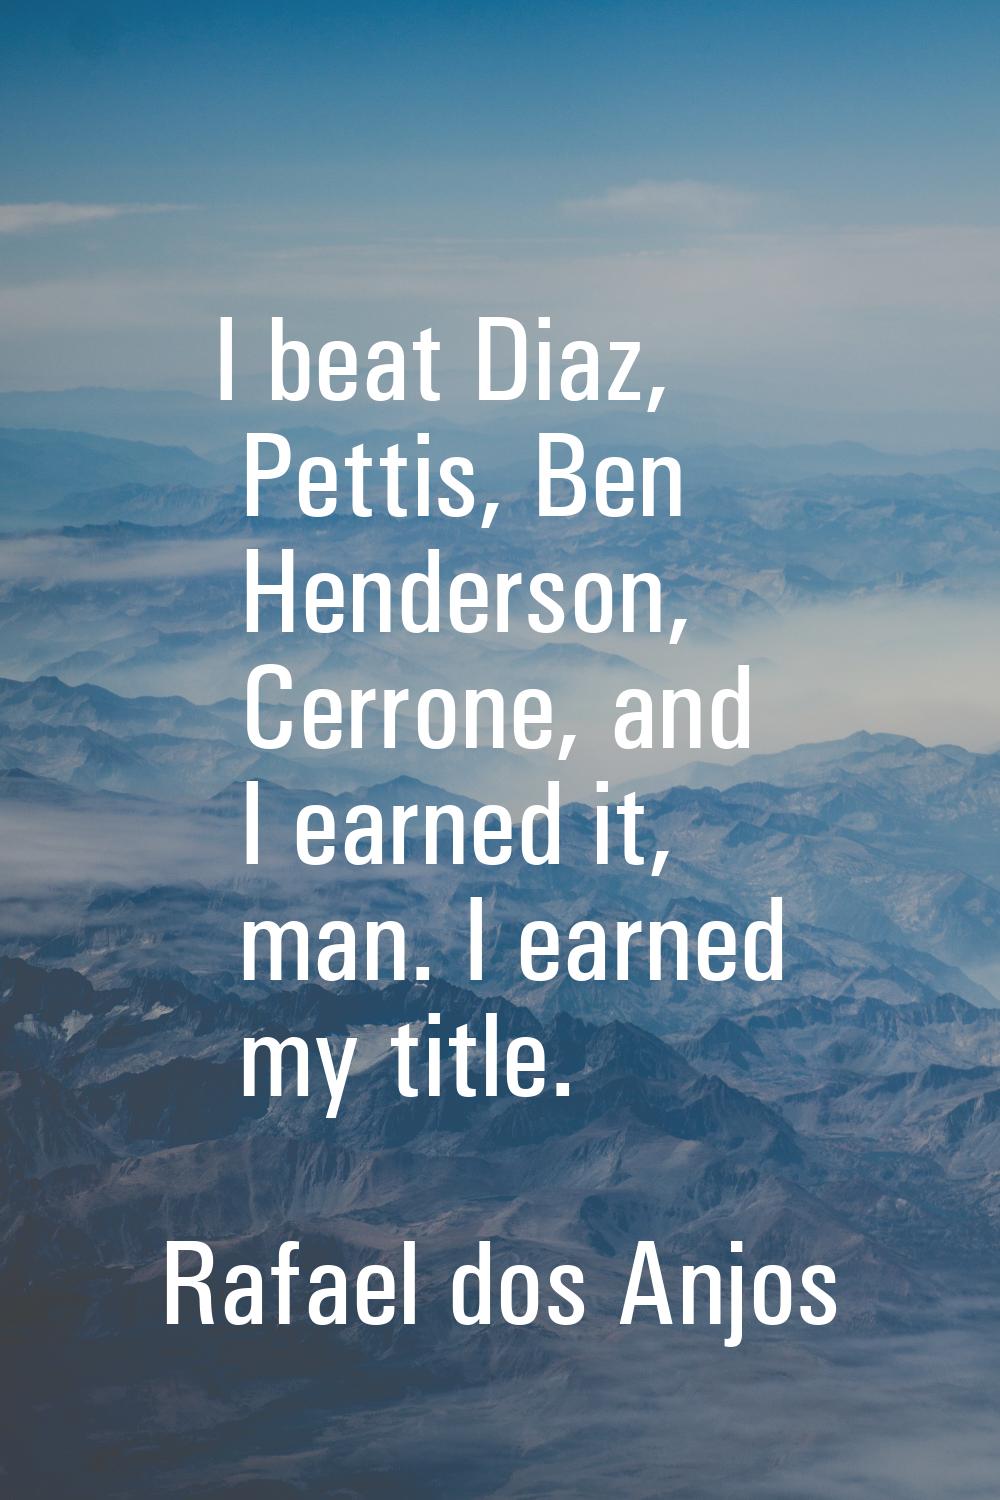 I beat Diaz, Pettis, Ben Henderson, Cerrone, and I earned it, man. I earned my title.